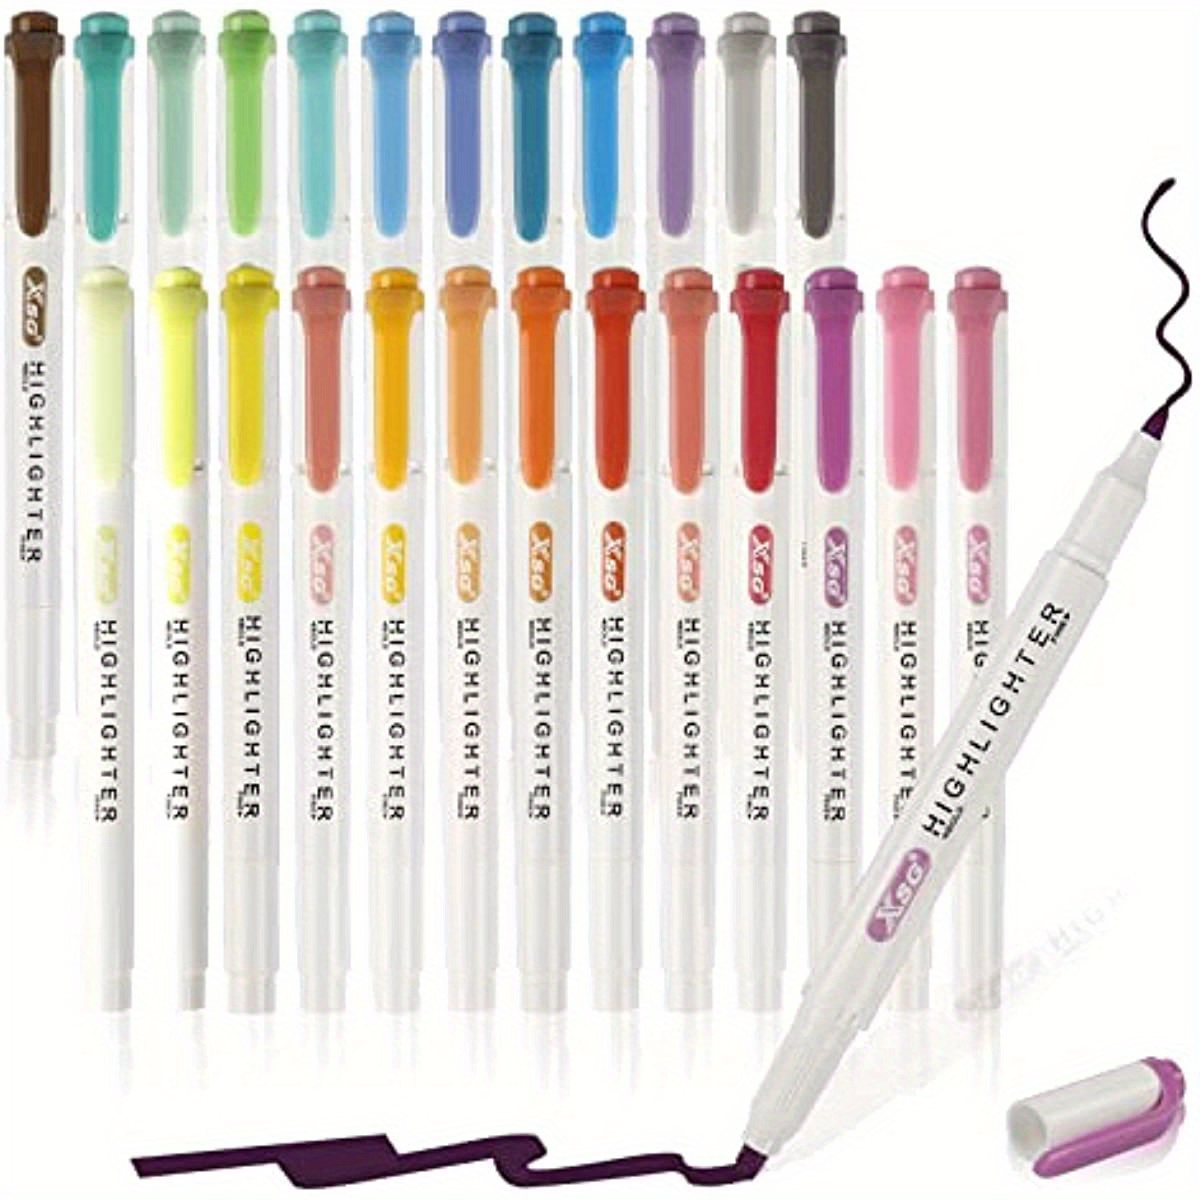 Highlighter - 100 pack color highlighter, color transparent visible  fluorescent pen shell, wide chisel point mark, fluorescent pen, school,  office